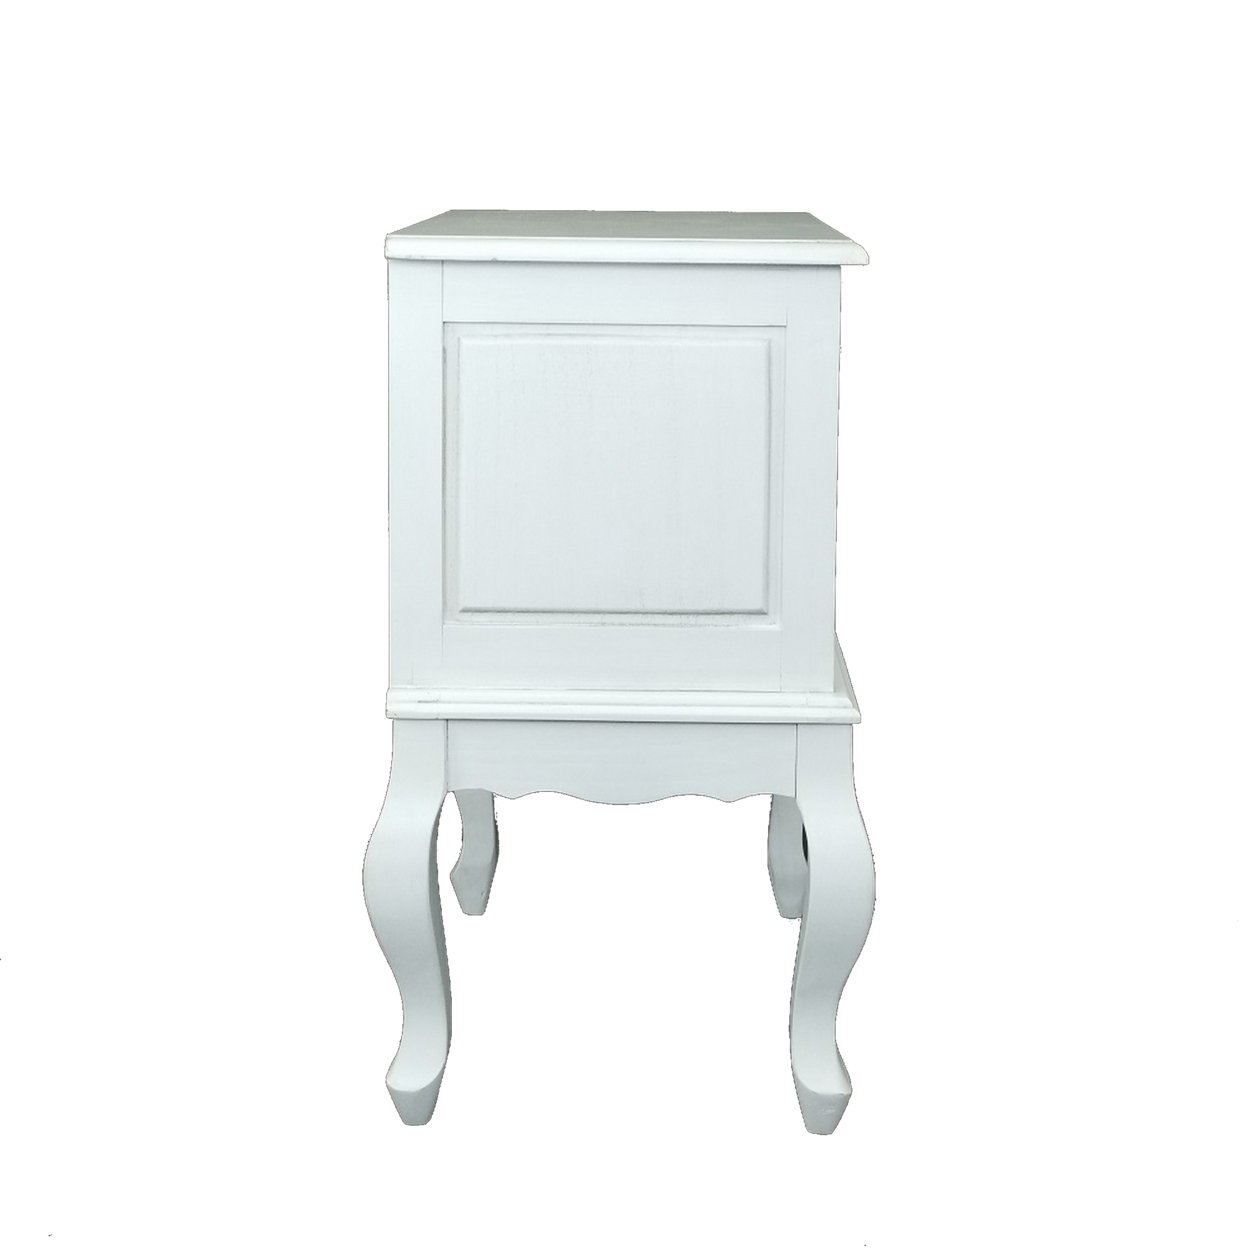 Mary 27 Inch Classic Wood Square Cabinet Table, 2 Drawers, Floral, White- Saltoro Sherpi- Saltoro Sherpi